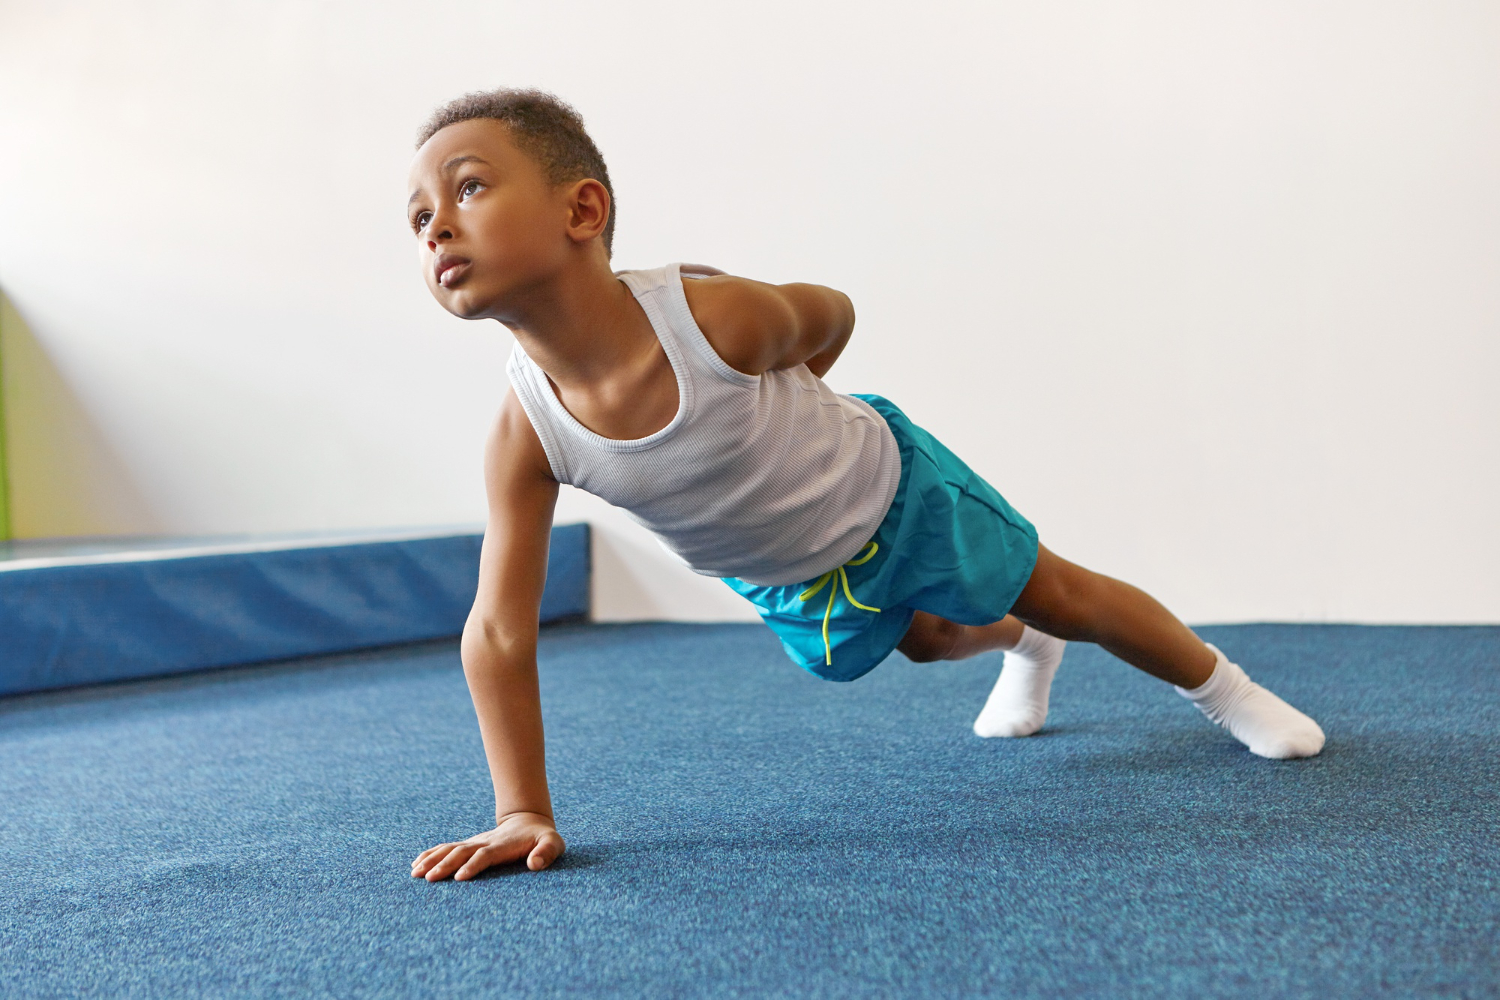 disciplined-skinny-african-american-kid-sportswear-doing-single-arm-plank.jpg